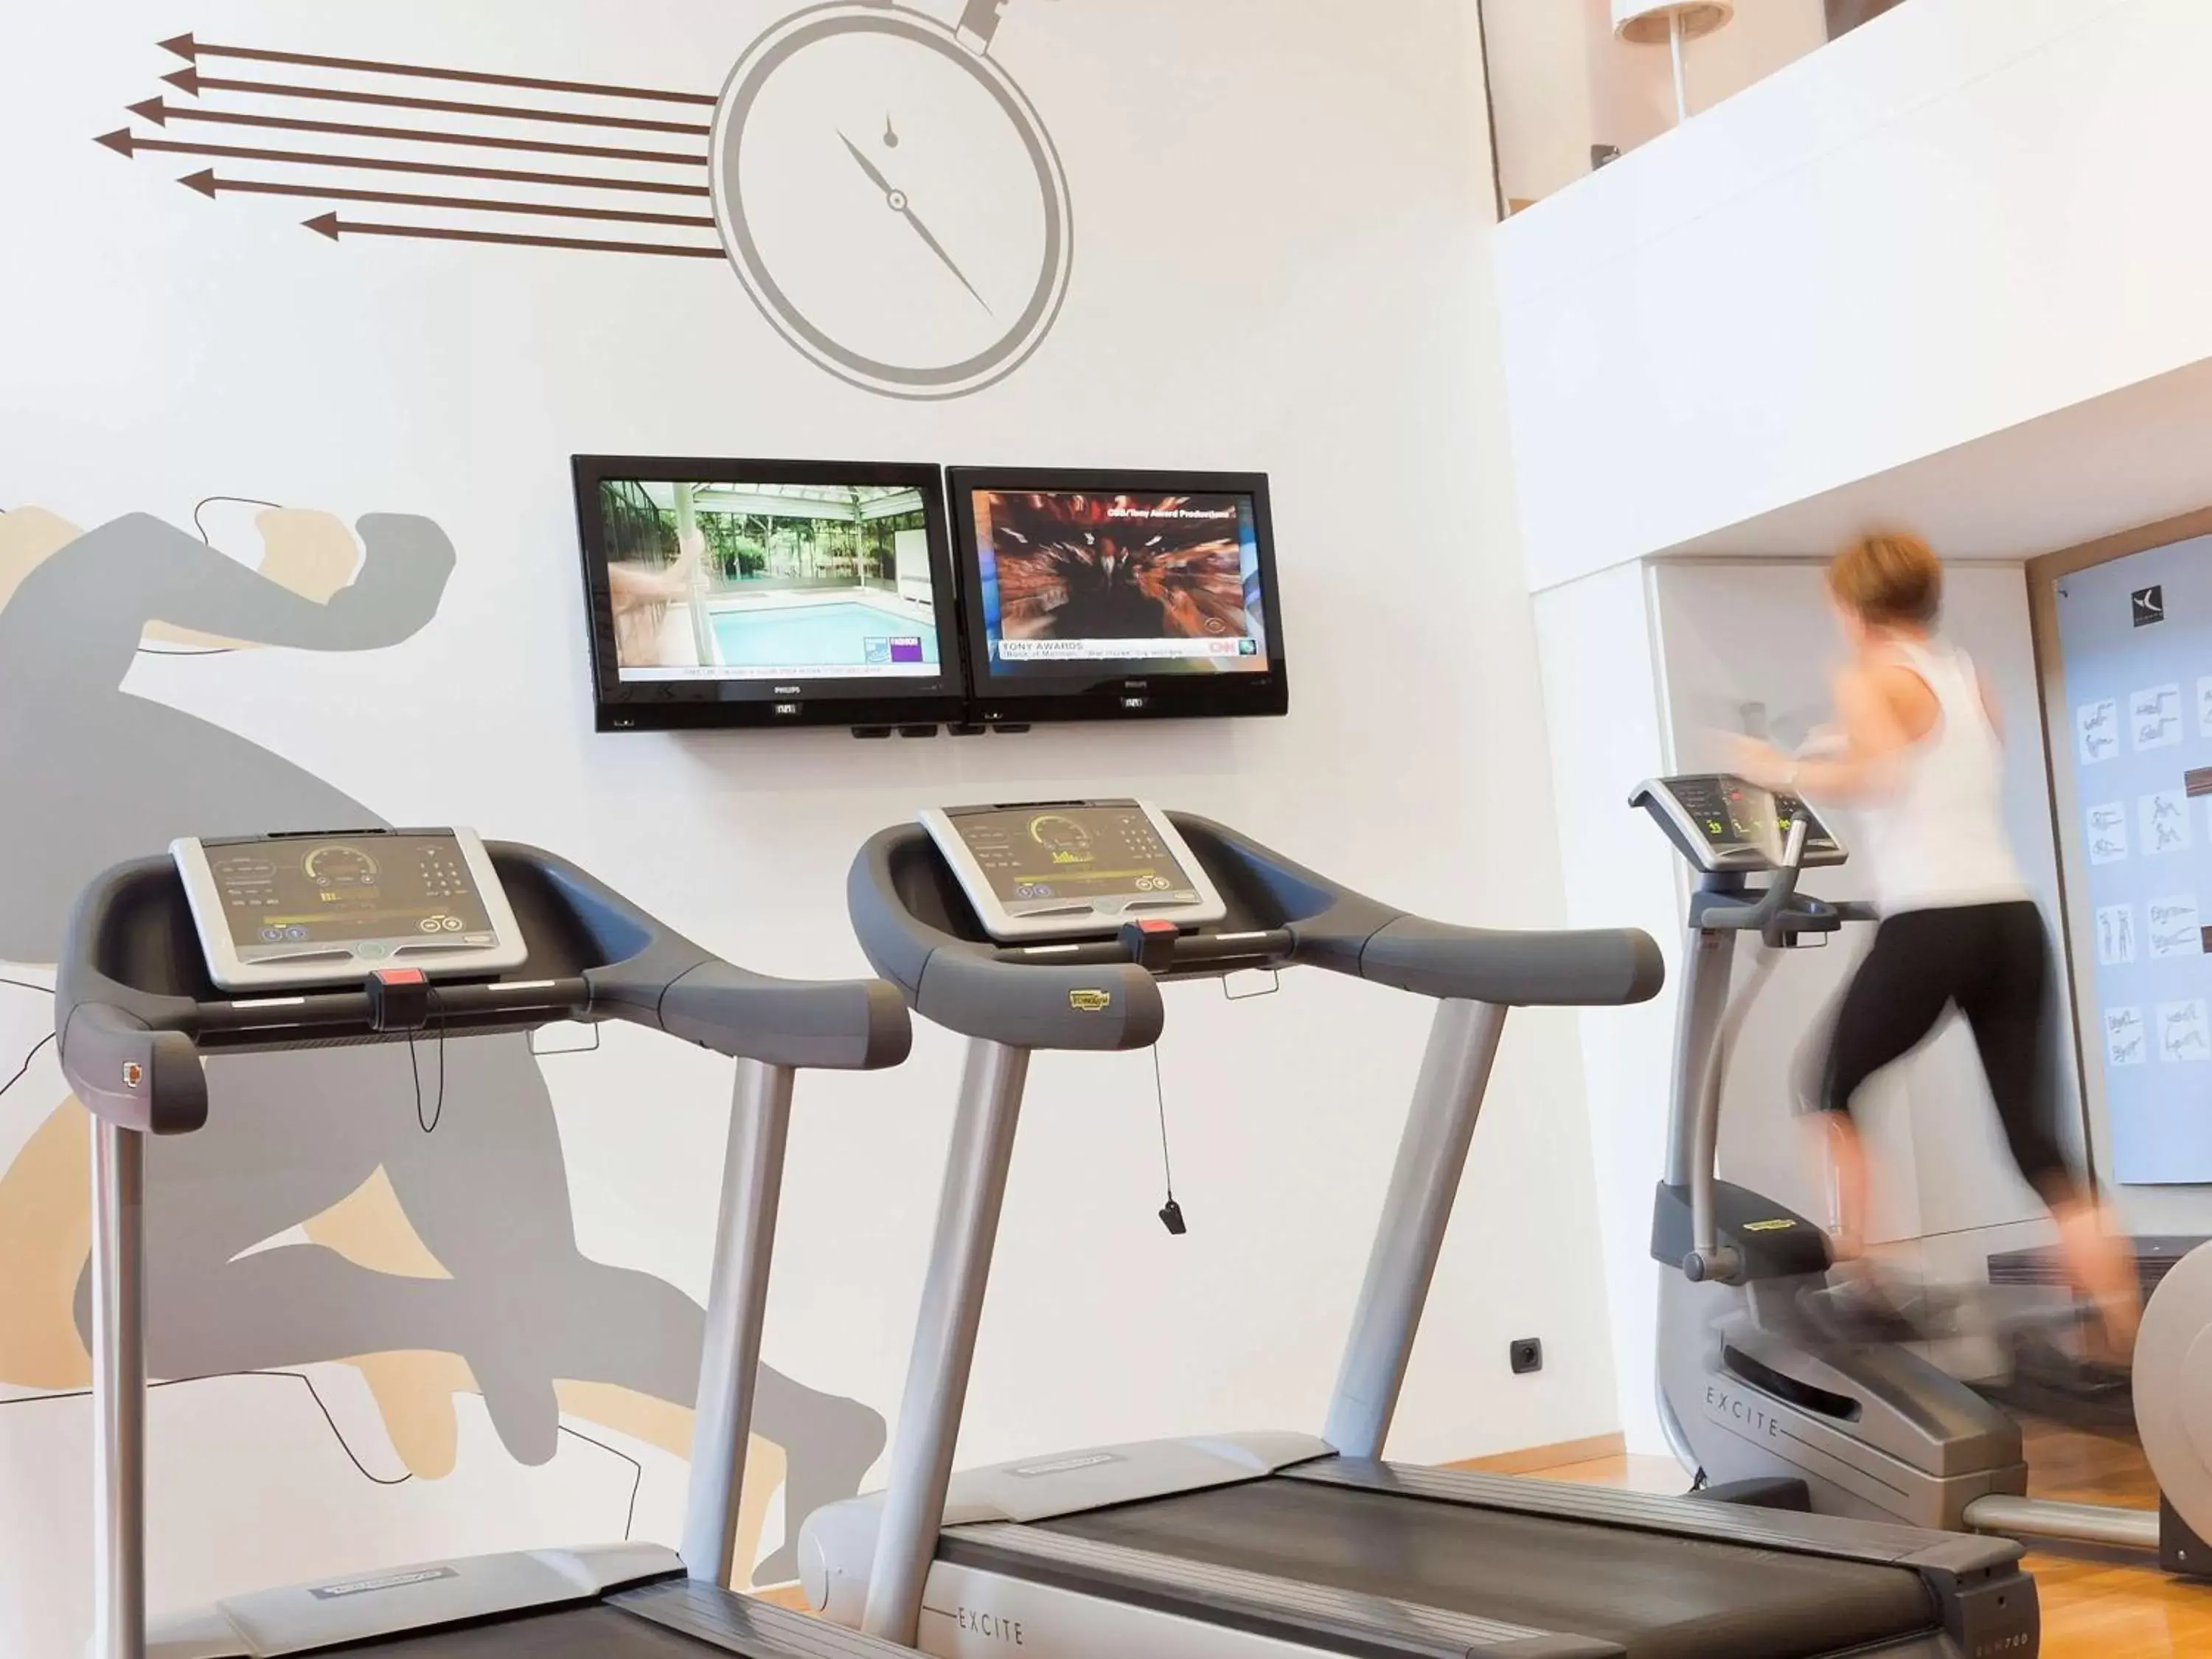 Fitness centre/facilities, Fitness Center/Facilities in Novotel Monte-Carlo